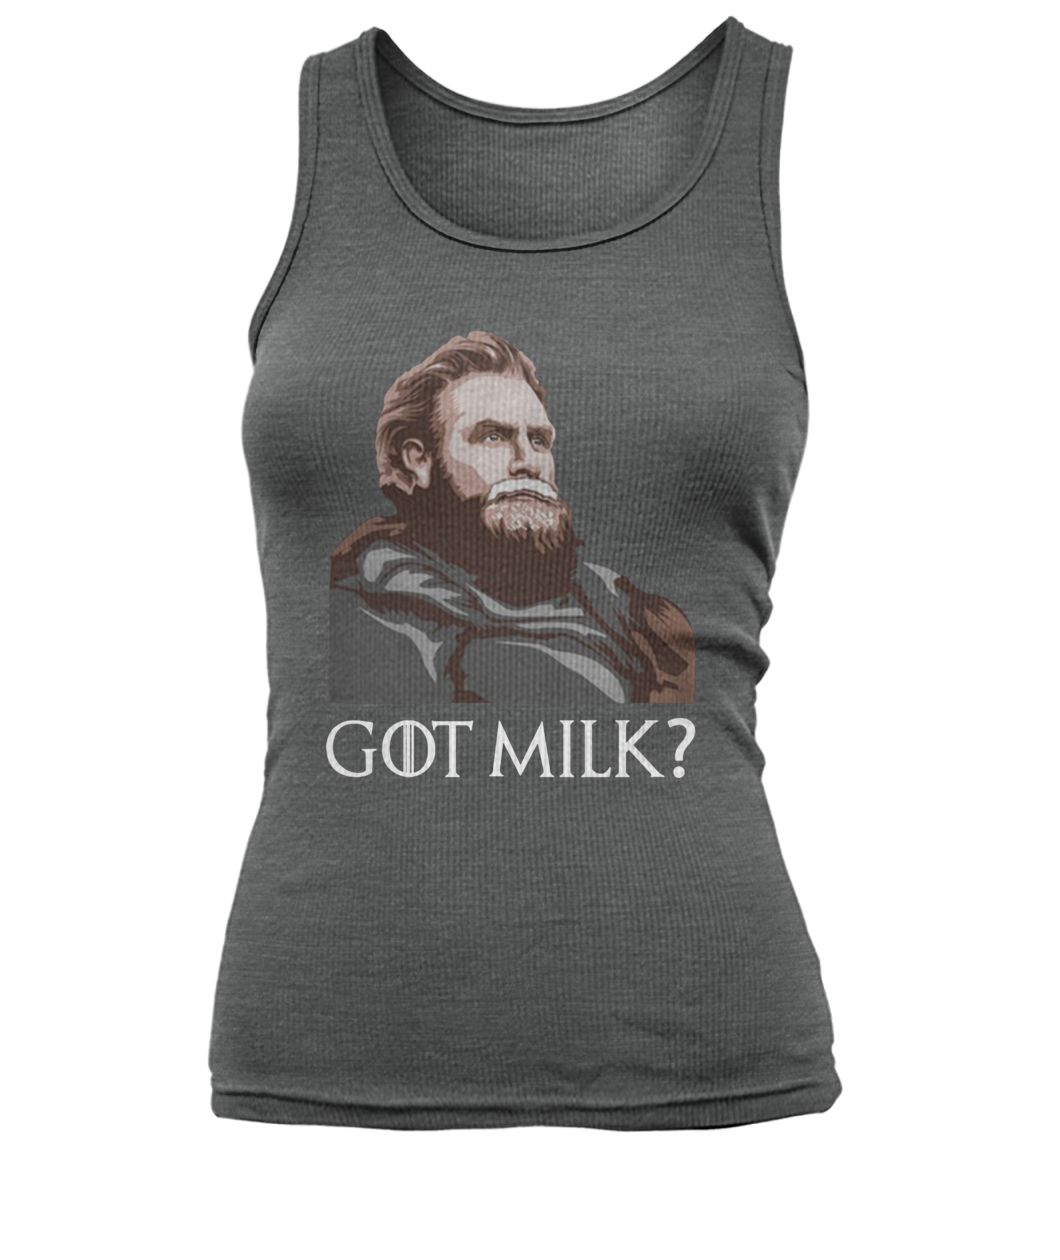 Game of thrones Jon snow got milk women's tank top